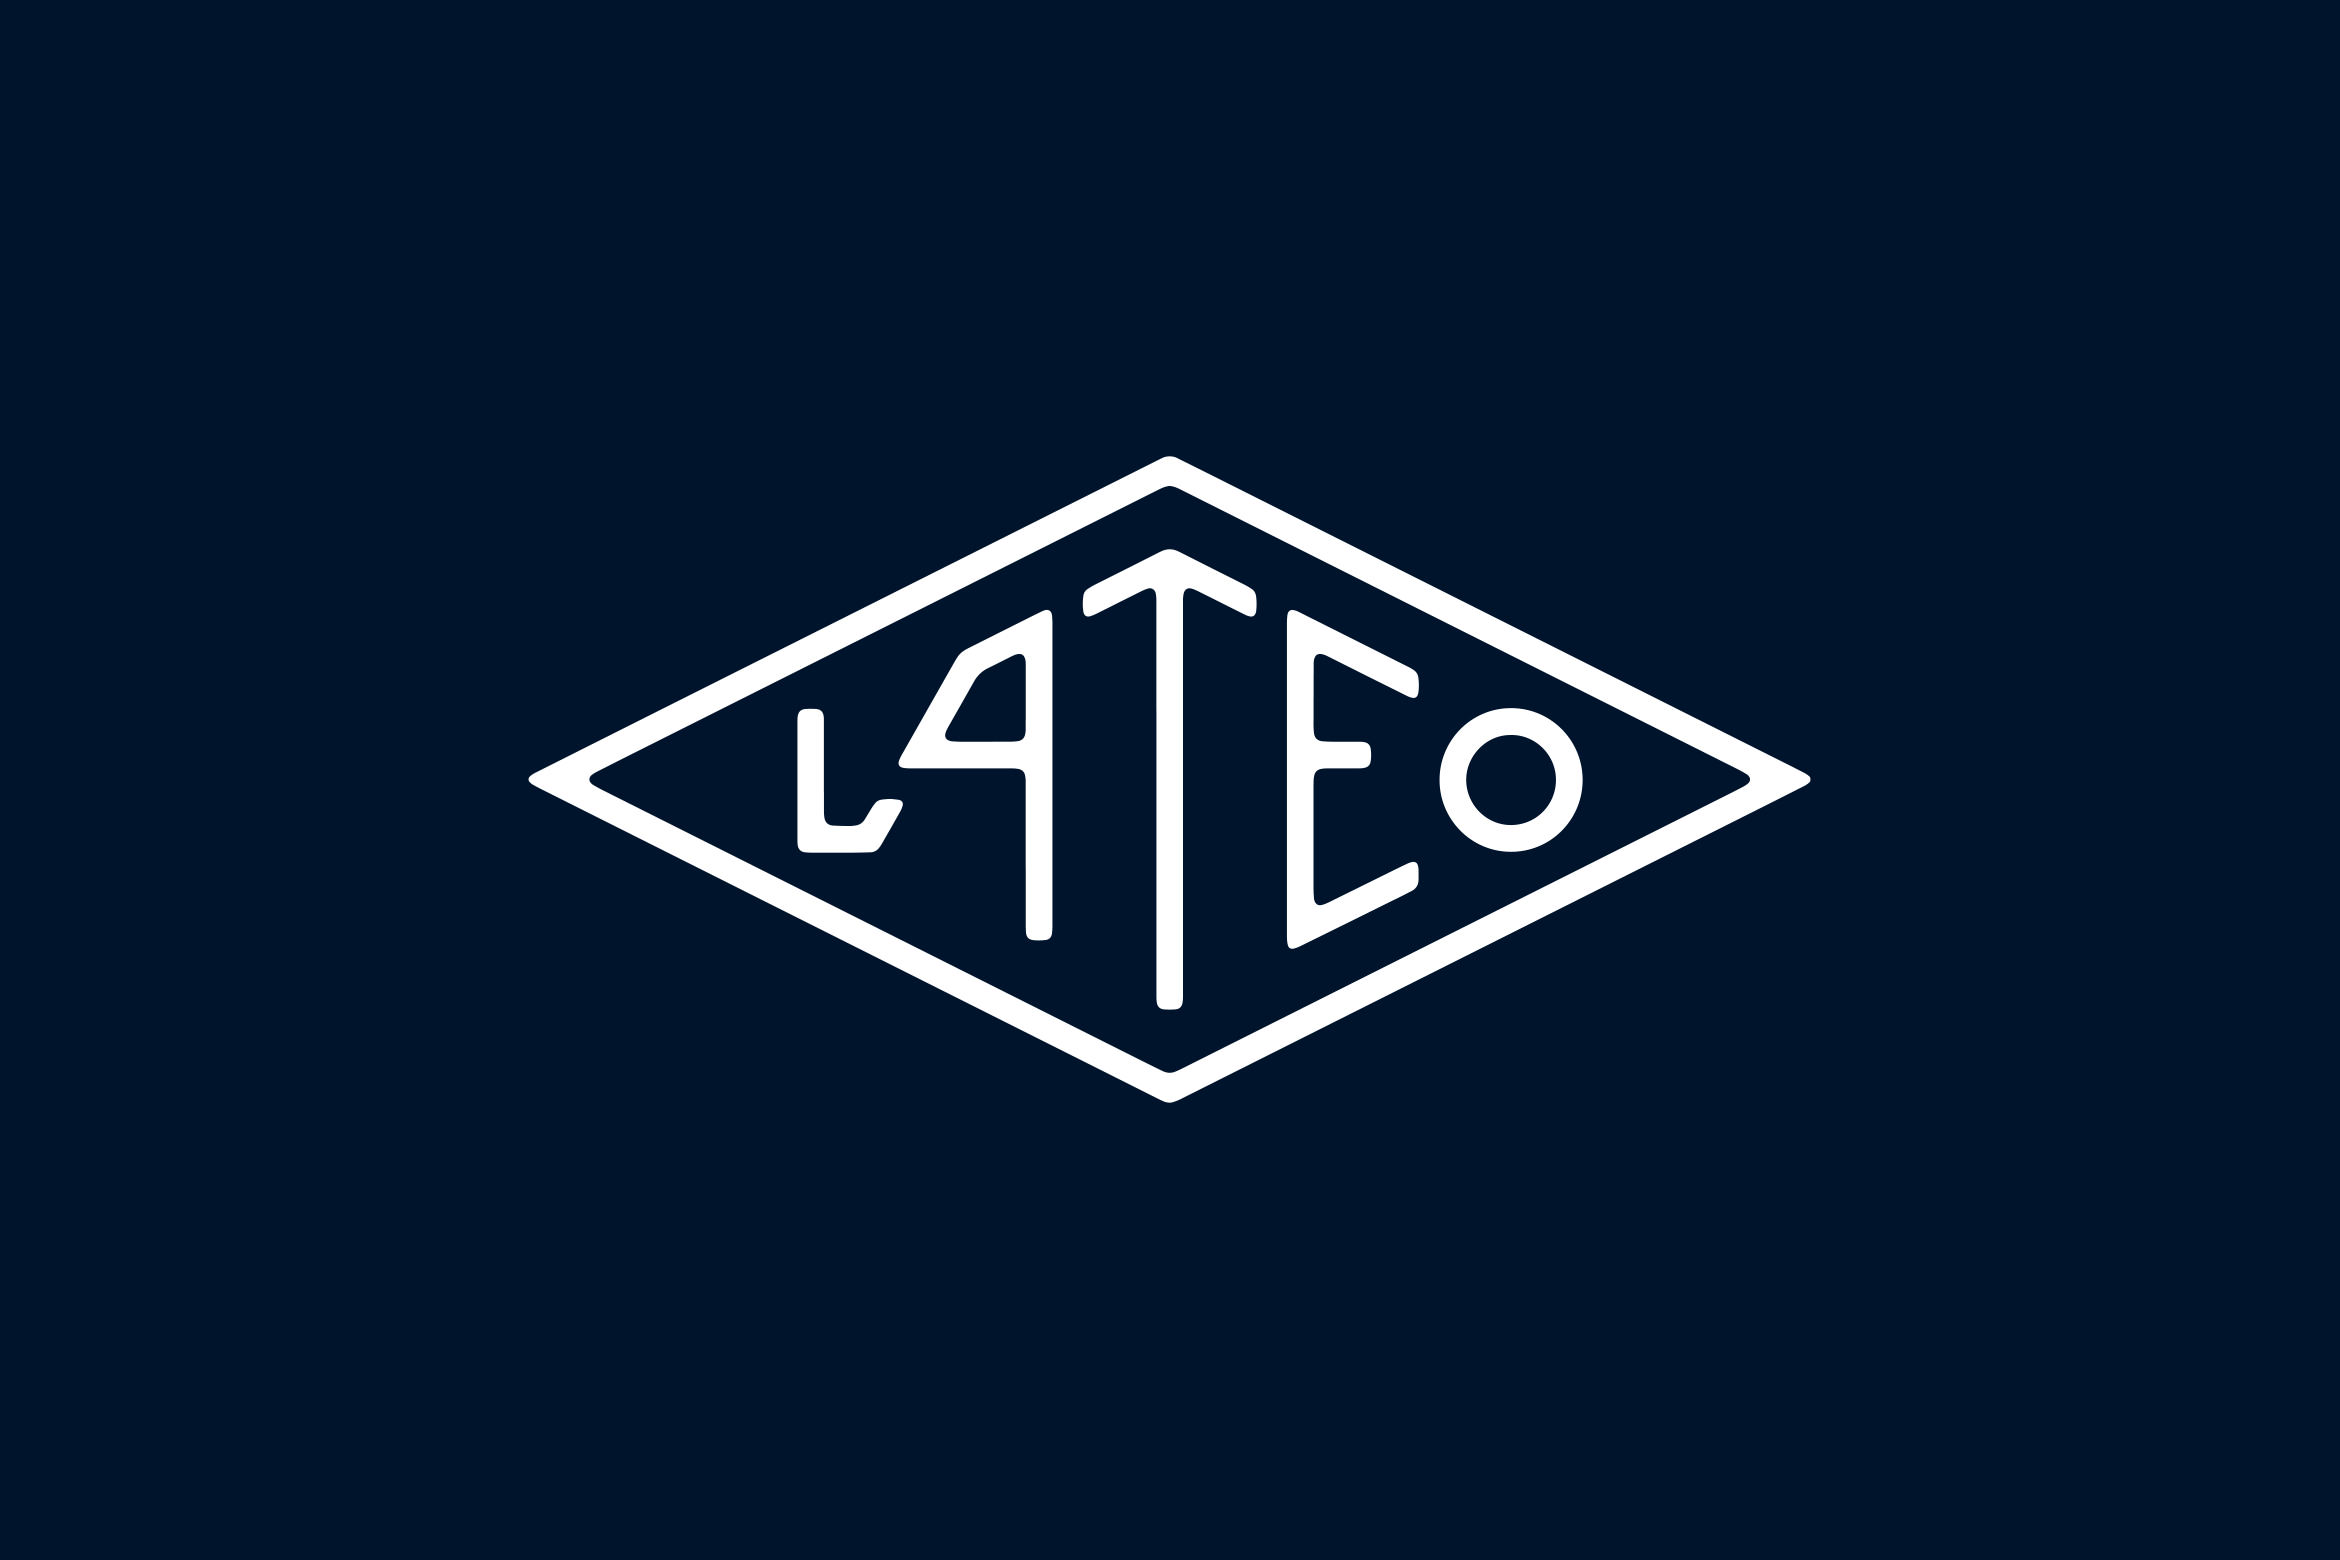 lateo_logo_branding